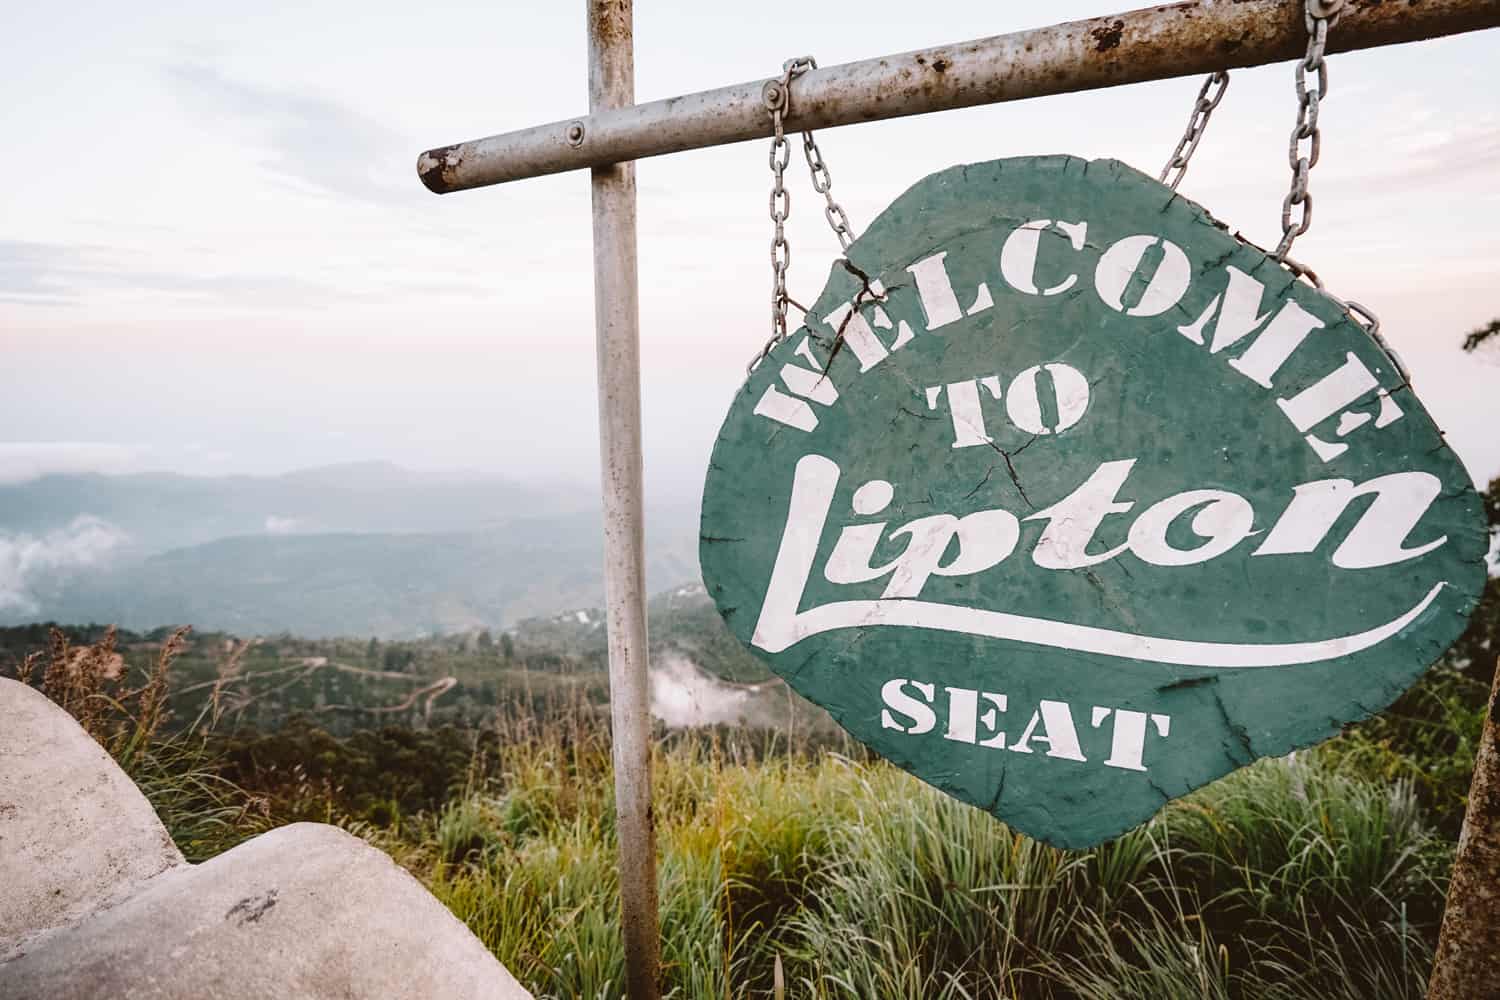 Lipton Seat